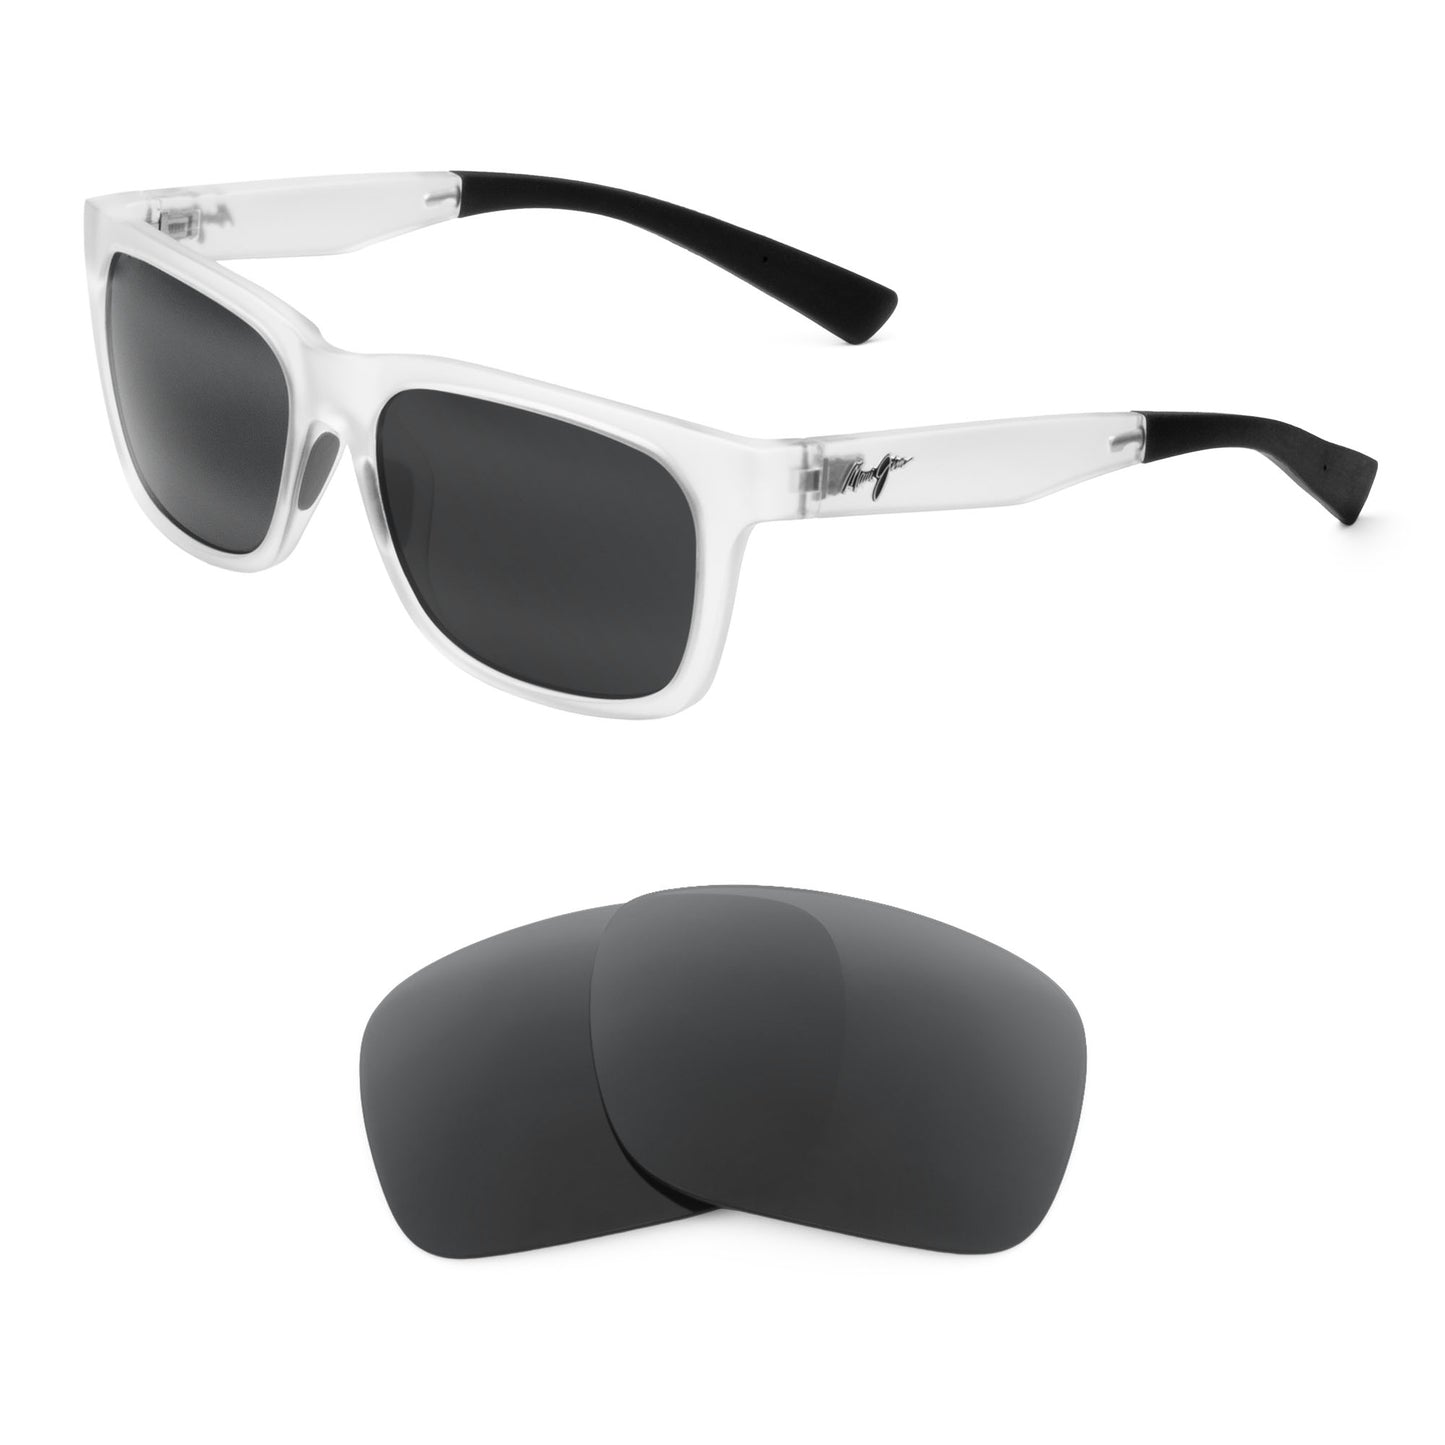 Maui Jim Boardwalk MJ539 sunglasses with replacement lenses